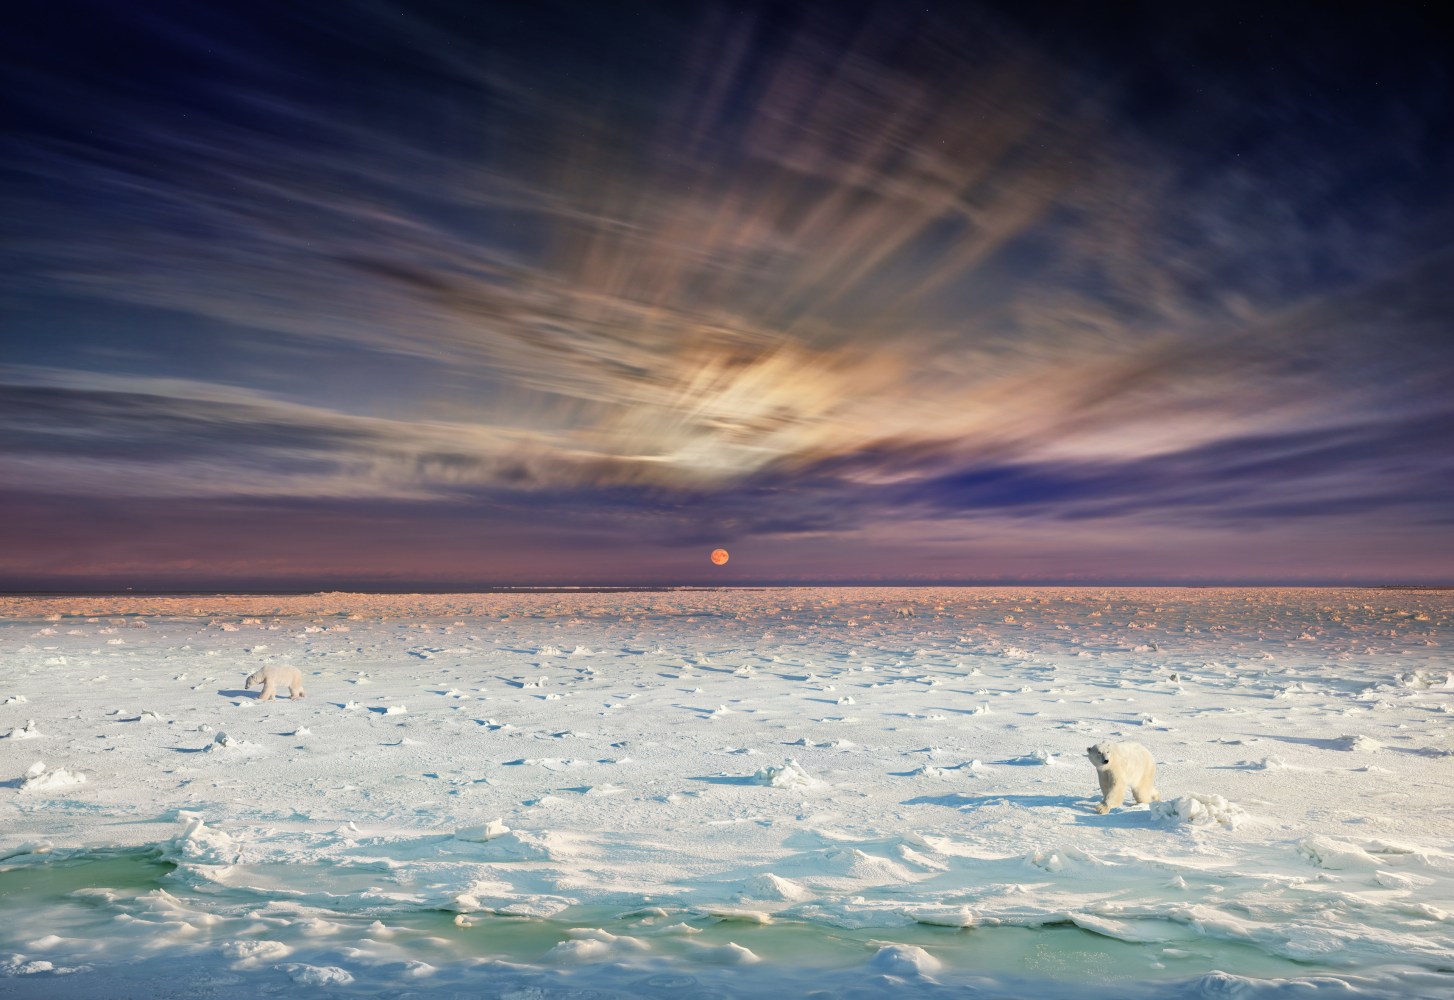 Stephen Wilkes  Polar Bears, Churchill, Manitoba, Canada Day to Night, 2019